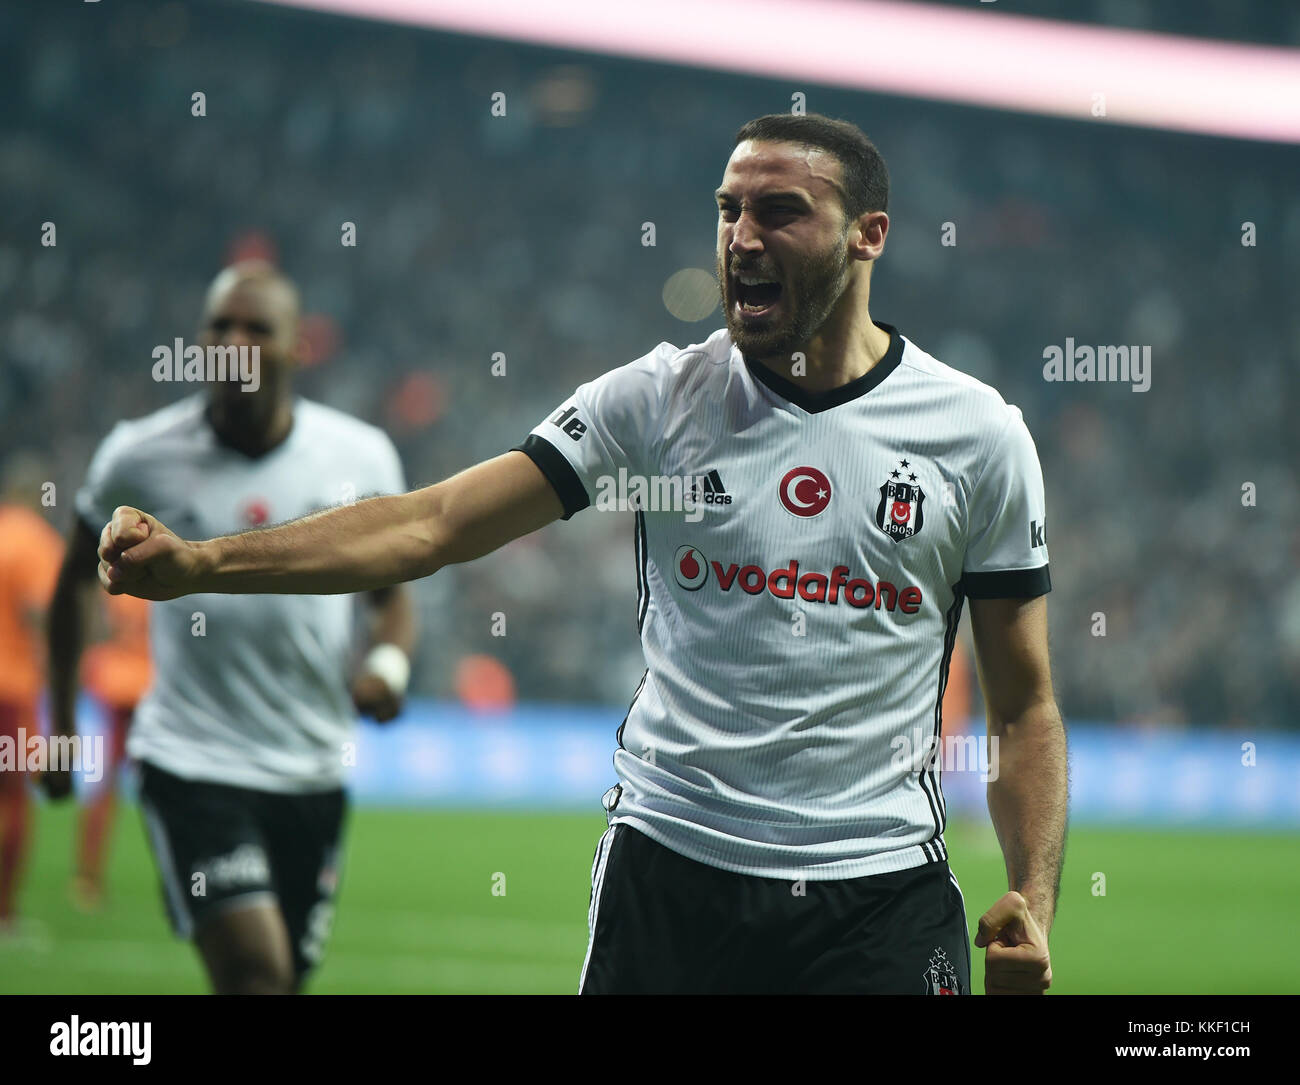 Istanbul, Turkey. 7th Apr, 2018. Dusko Tosic of Besiktas celebrates scoring  during 2017-2018 Turkish Super League match between Besiktas and Goztepe in  Istanbul, Turkey, on April 7, 2018. Besiktas won 5-1. Credit